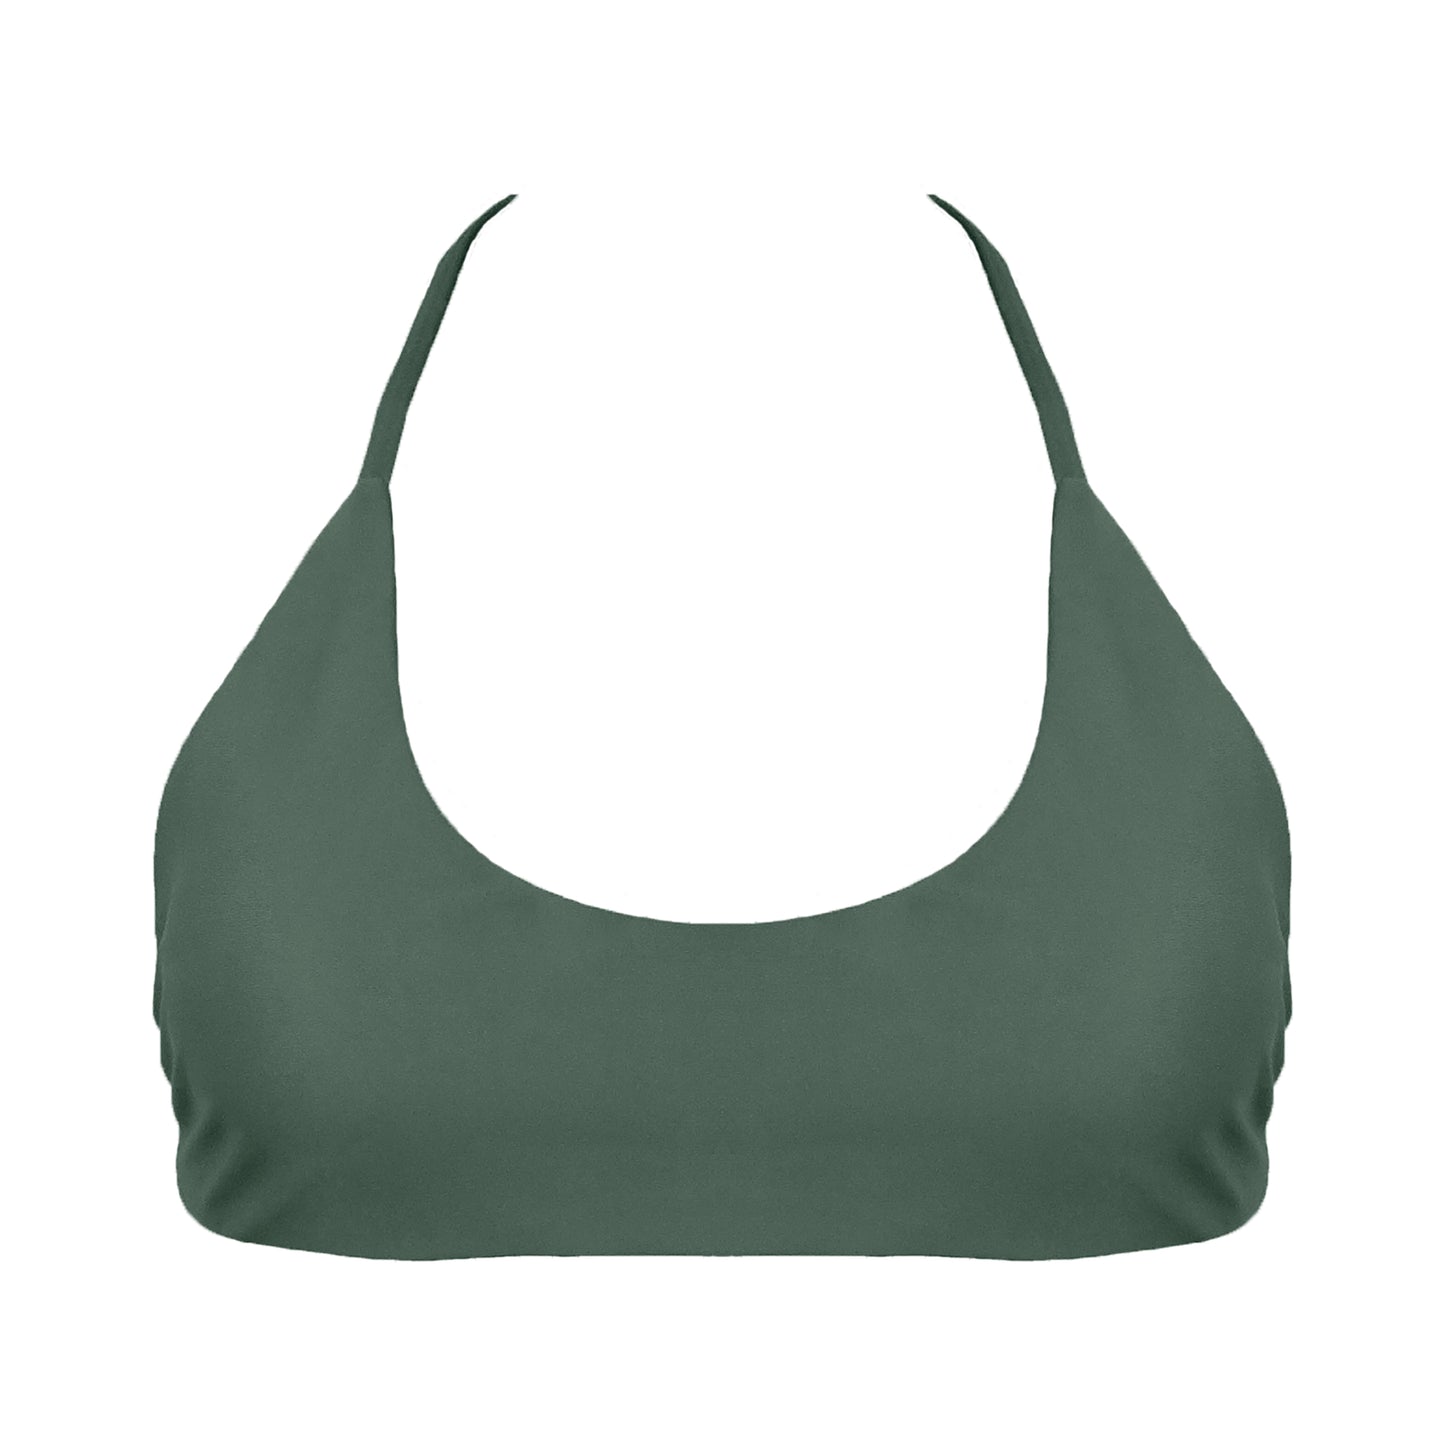 Sage green Sports bra inspired bikini top with a bralette scoop neckline and skinny racerback straps.